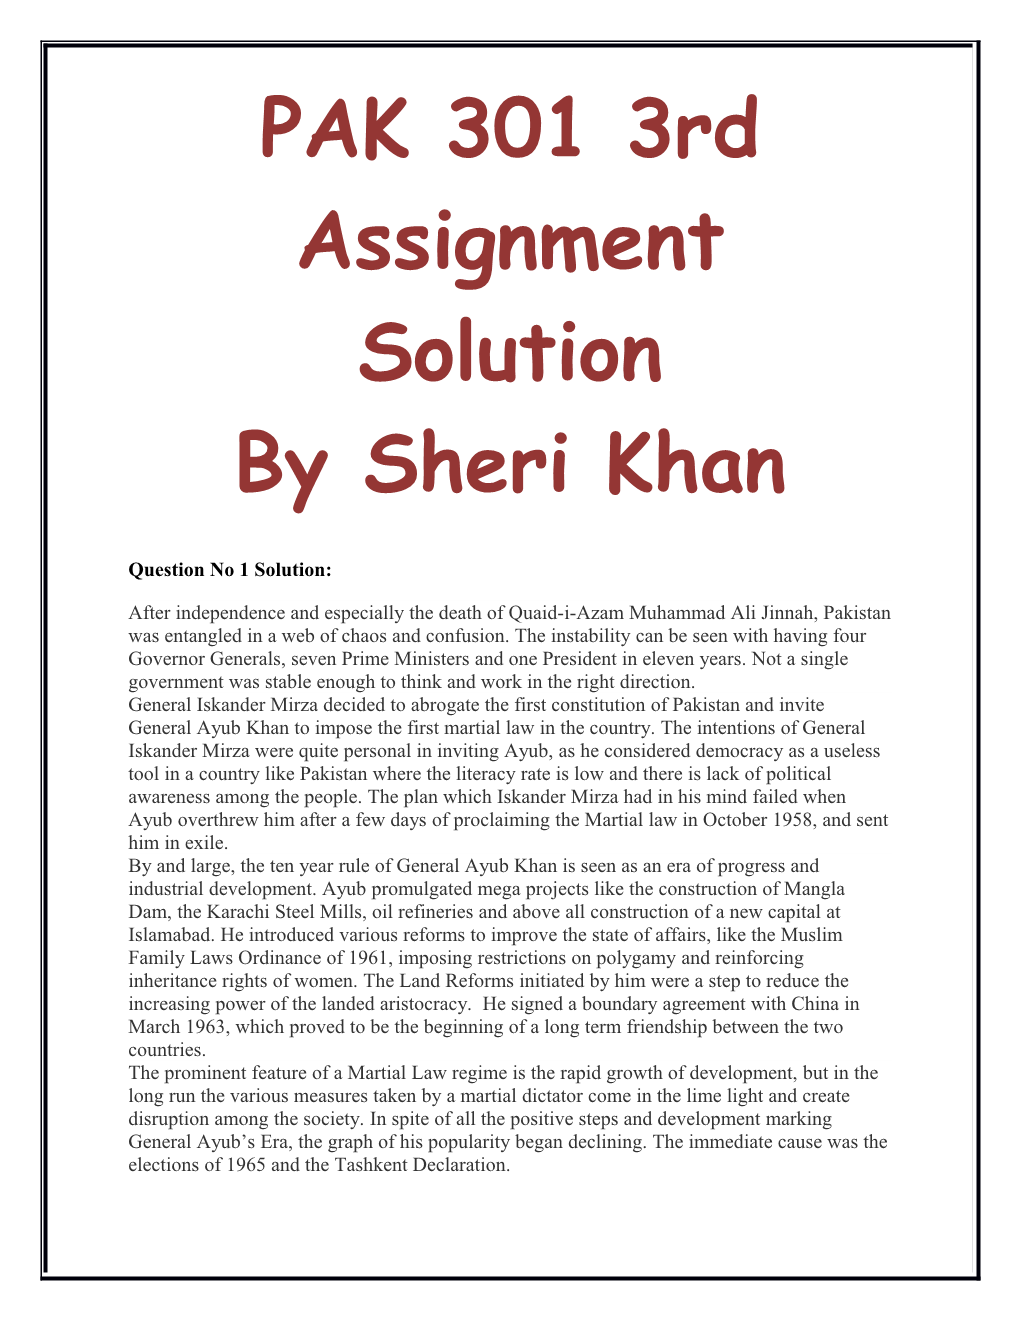 PAK 301 3Rd Assignment Solution